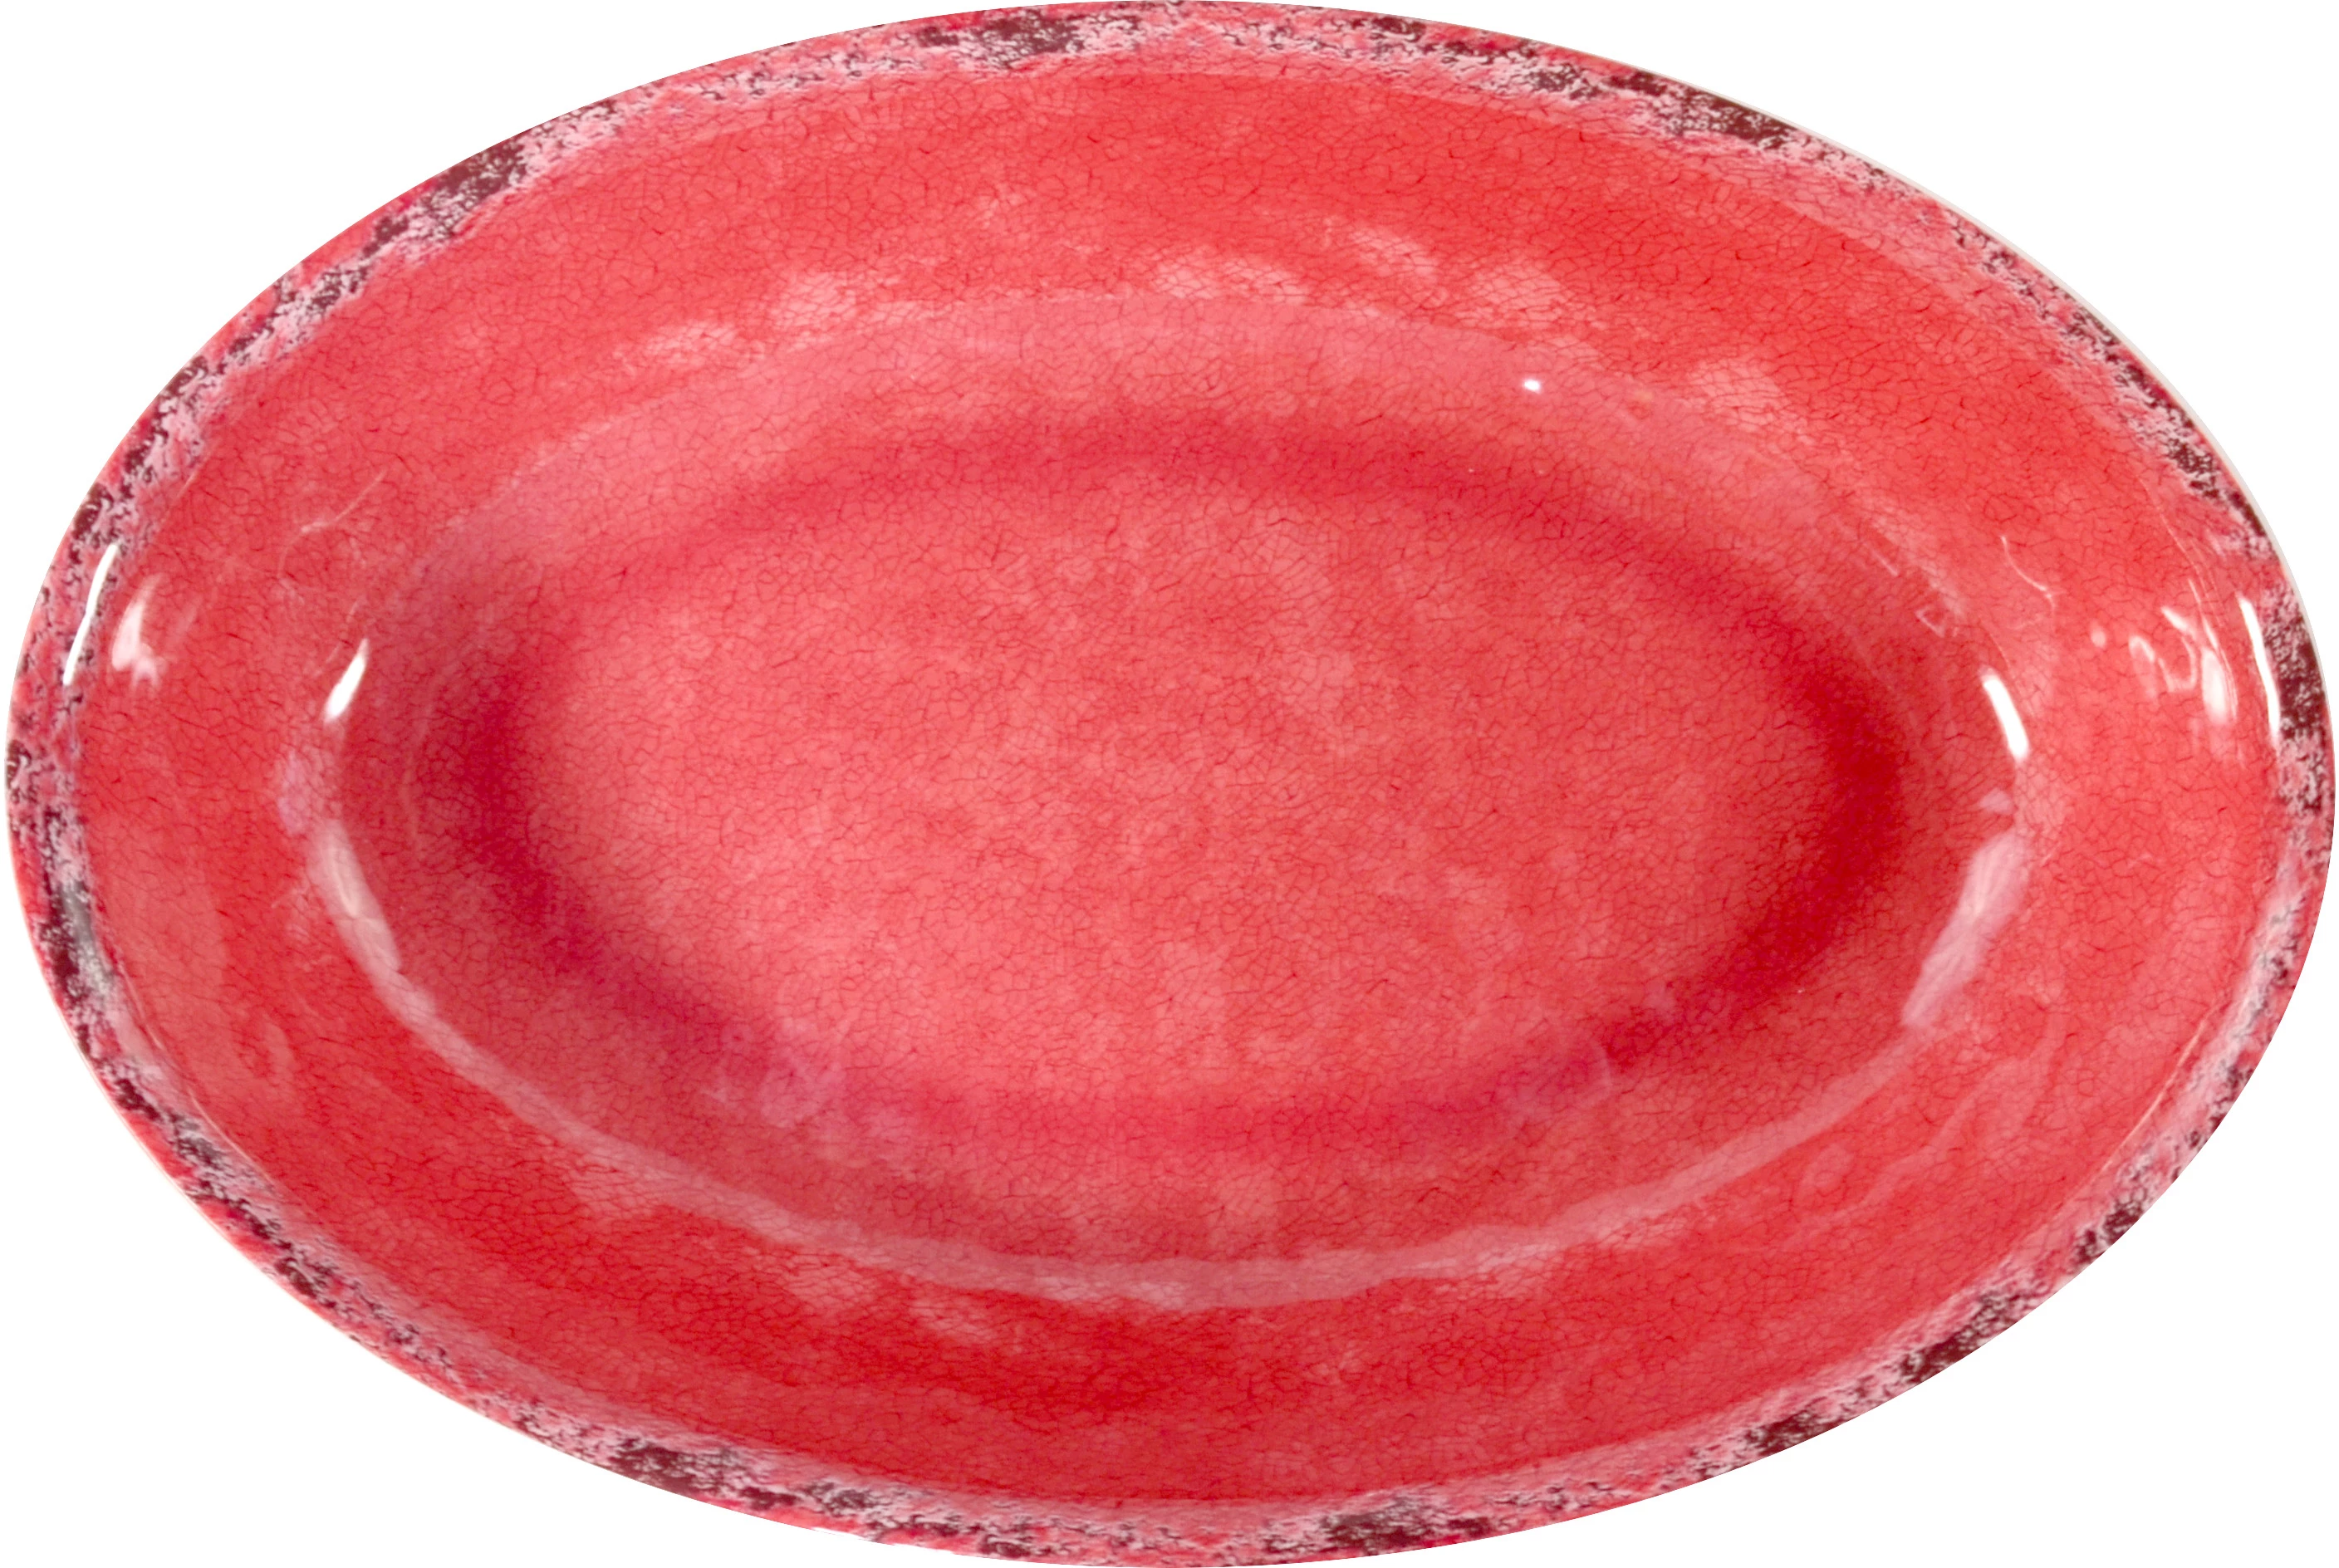 Dalebrook Casablanca oval skål, rød, 380 cl, 42 x 28 cm